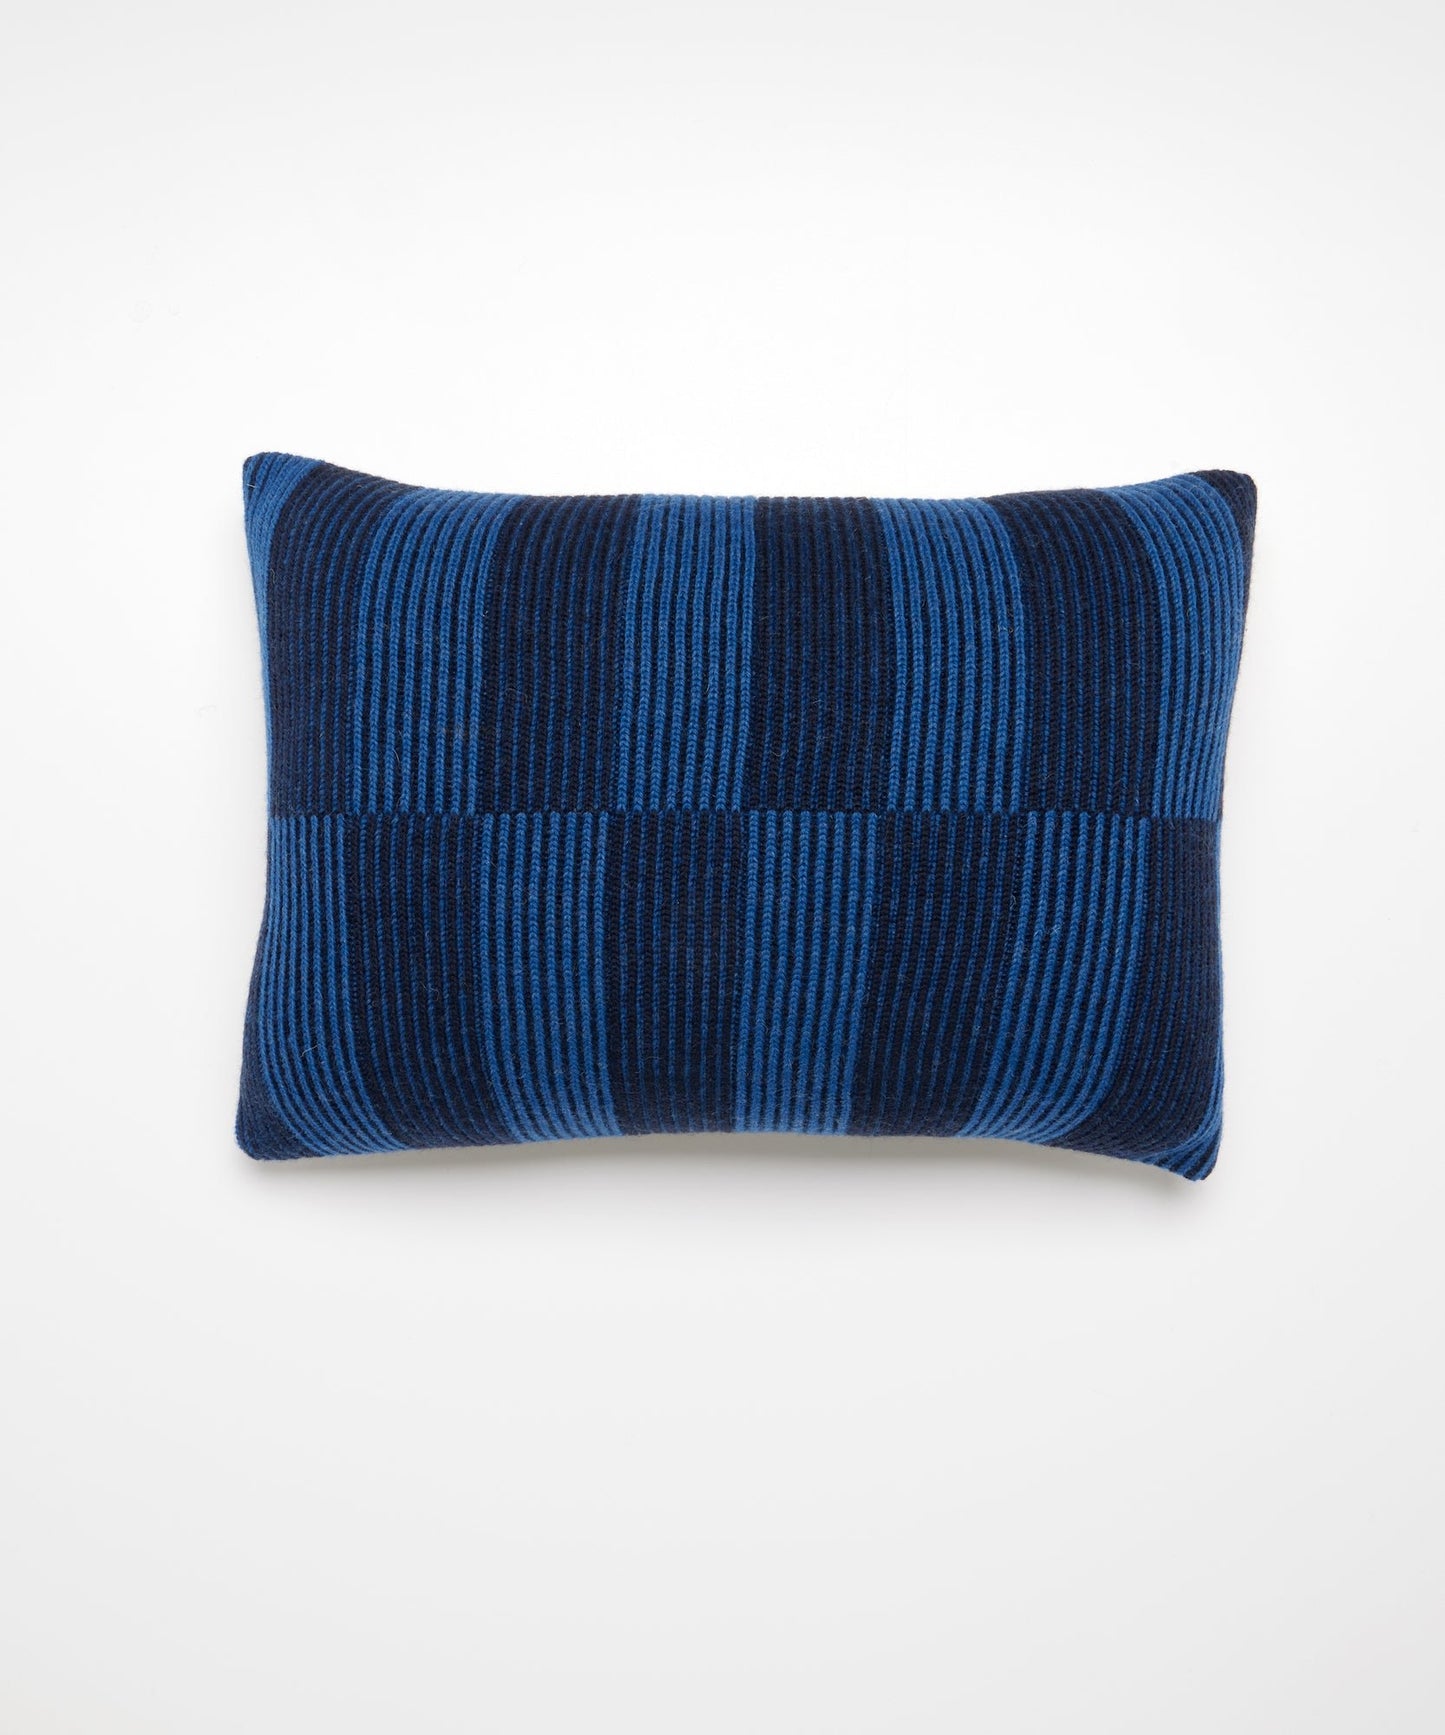 British Wool Tiles Cushion - Electric Blue  55cm x 40cm